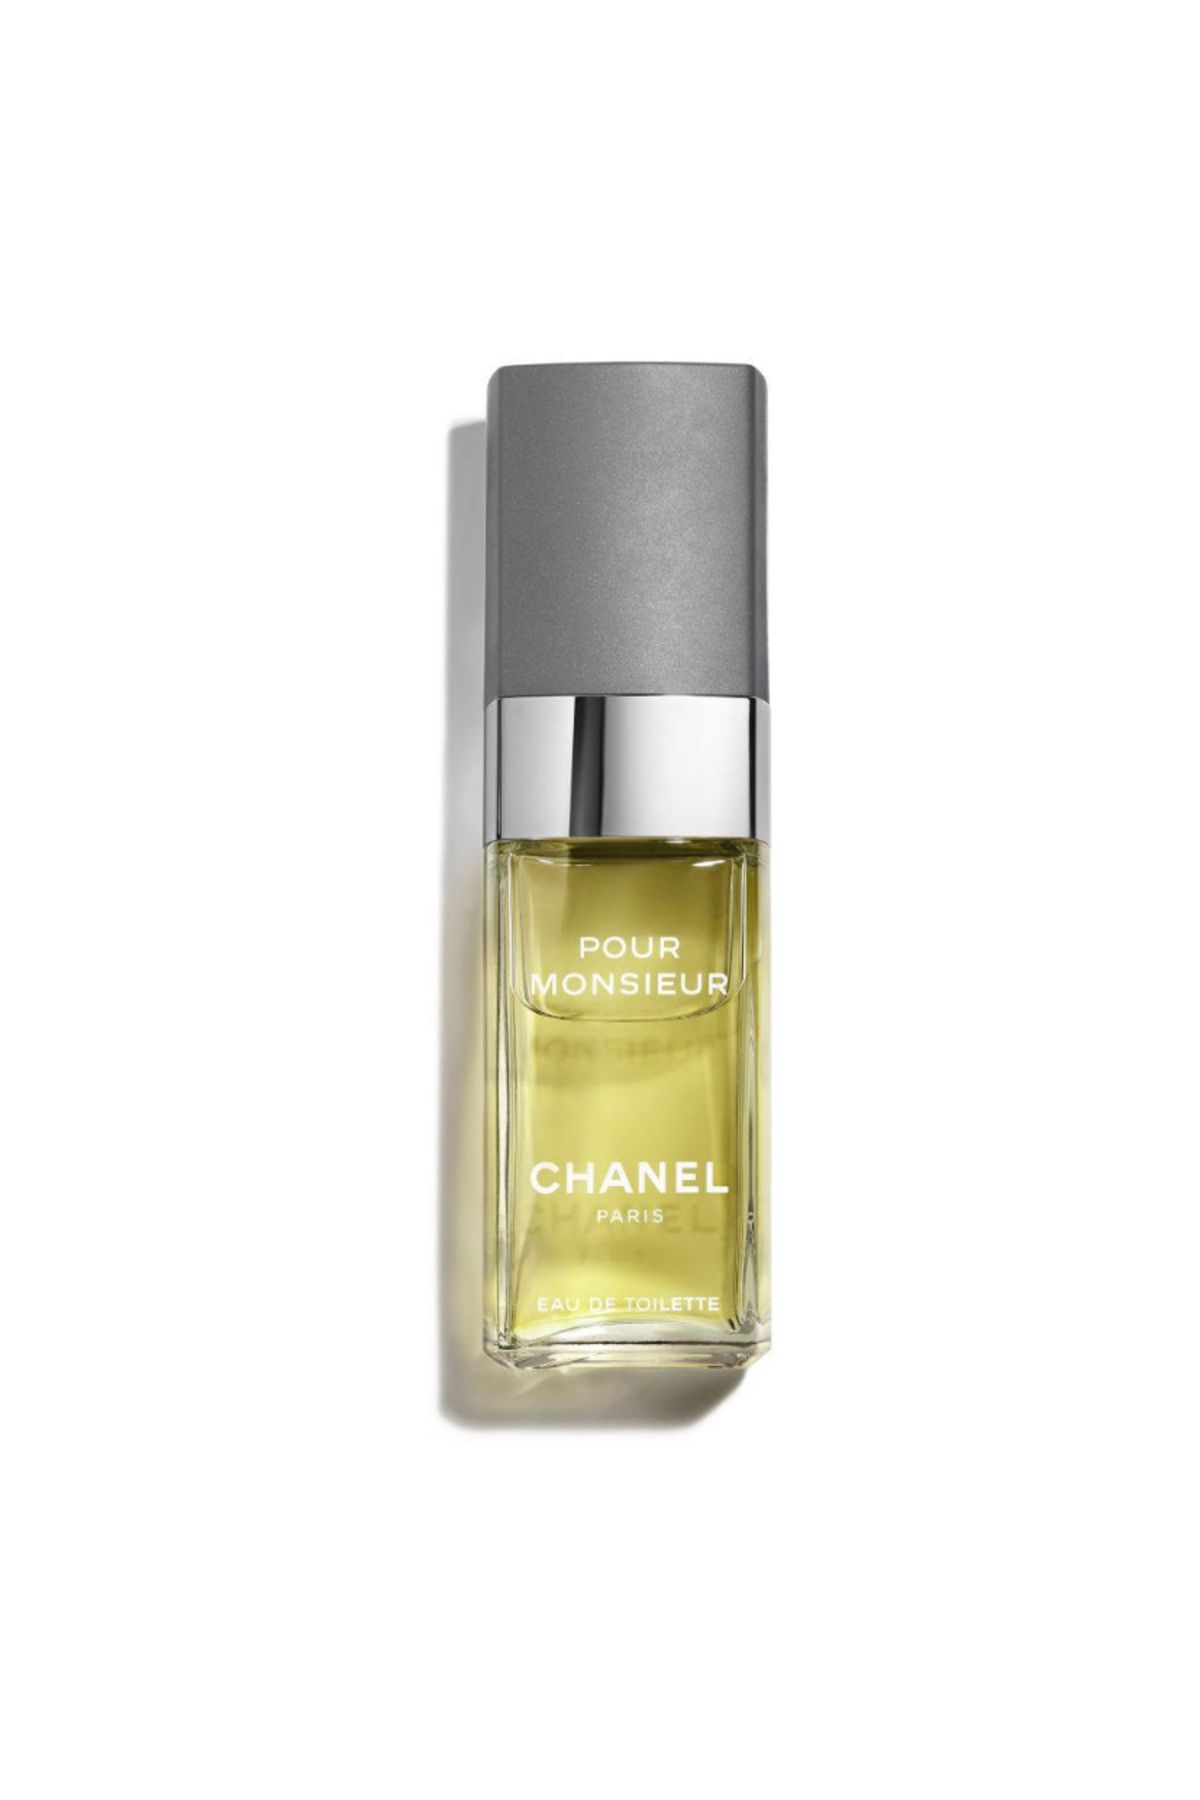 Chanel POUR MONSIEUR EDT PARFUM 100ml Pinkestcosmetics